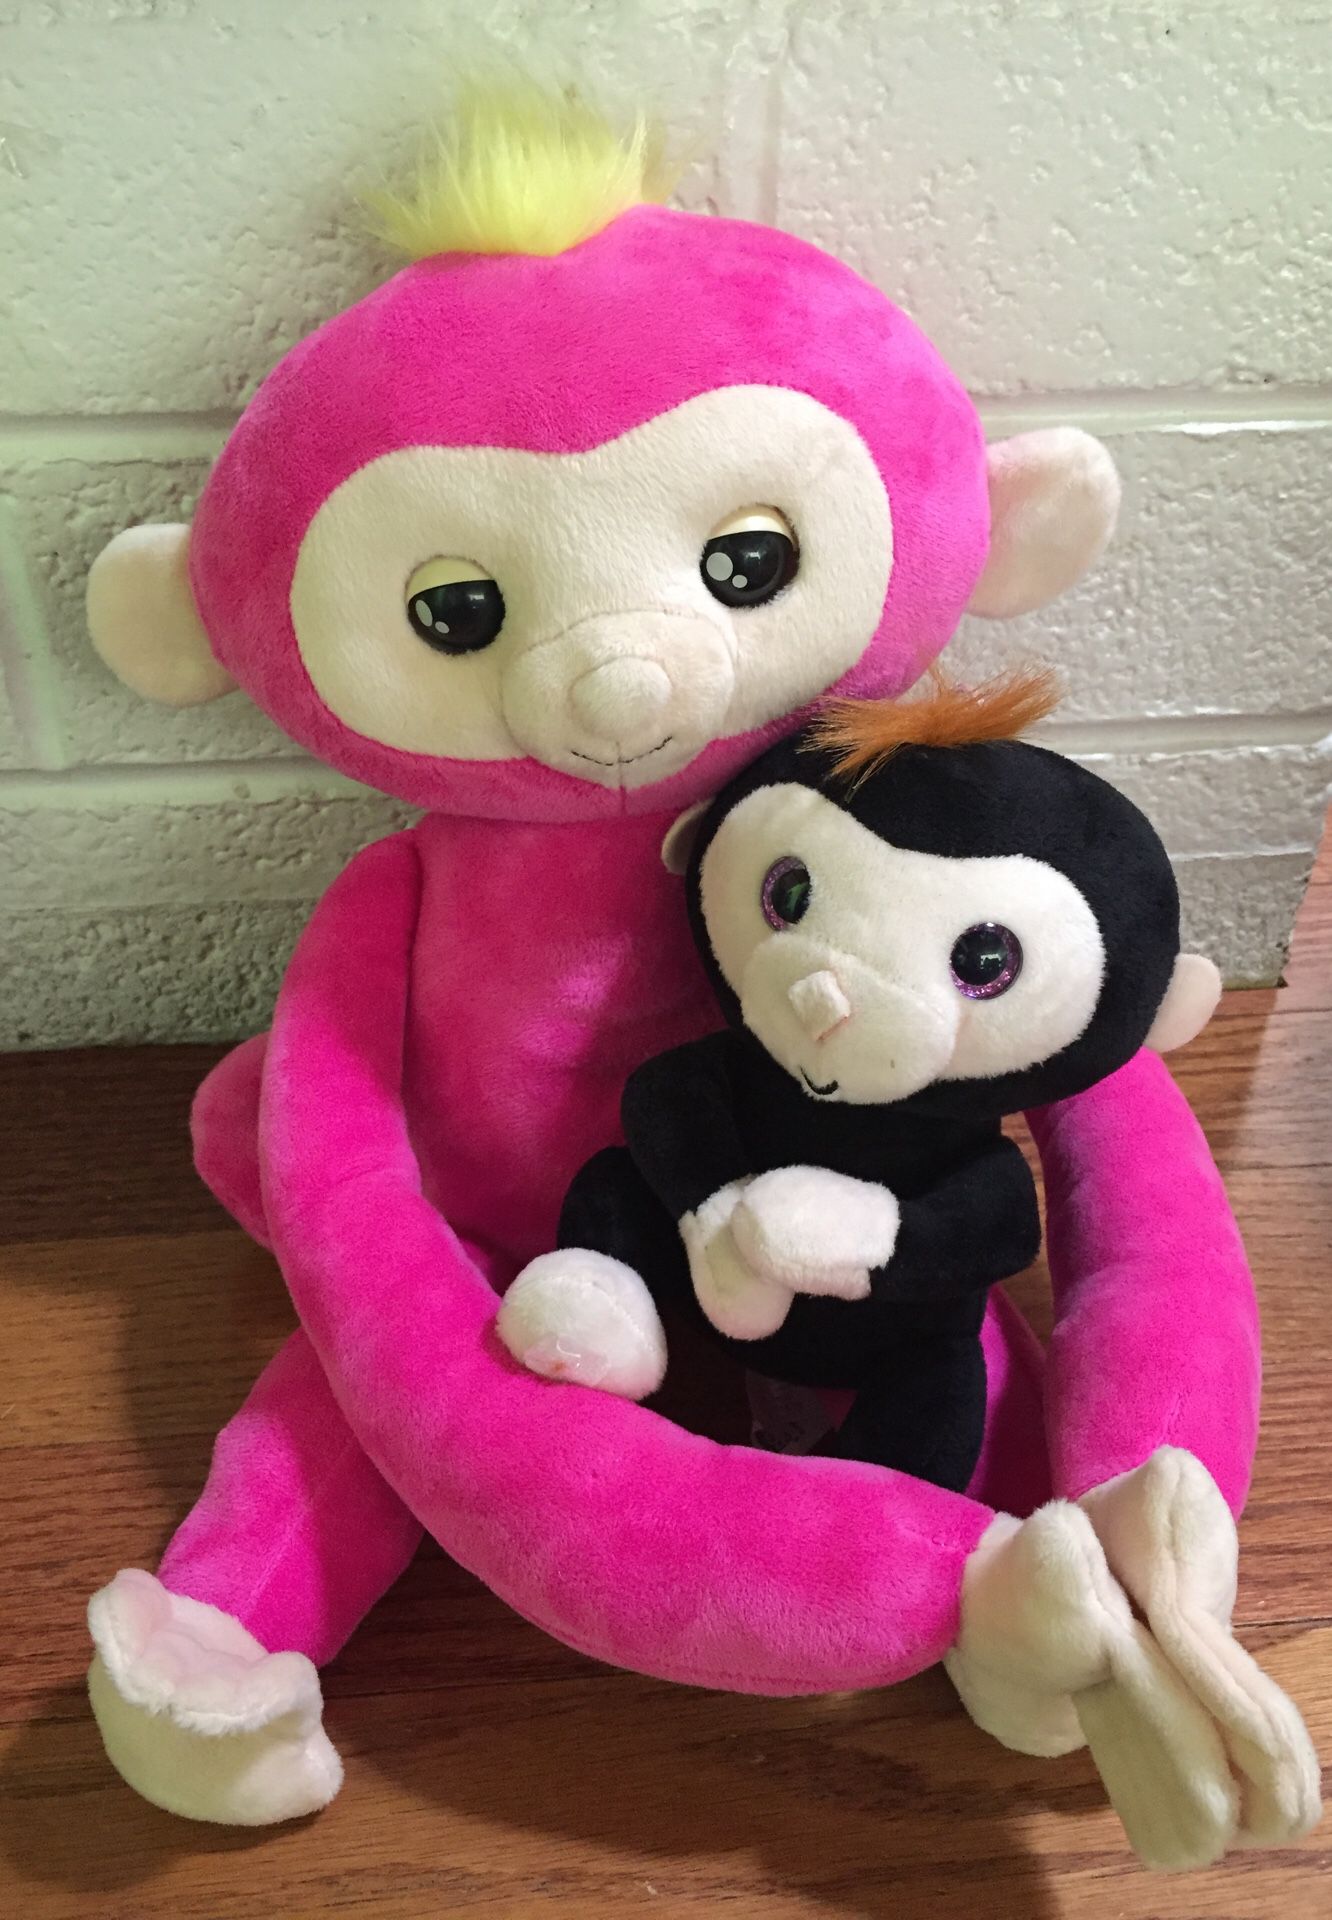 Fingerlings Monkey and Baby Pink and Black Plush Toys talking plushie stuffed animal Stuffie